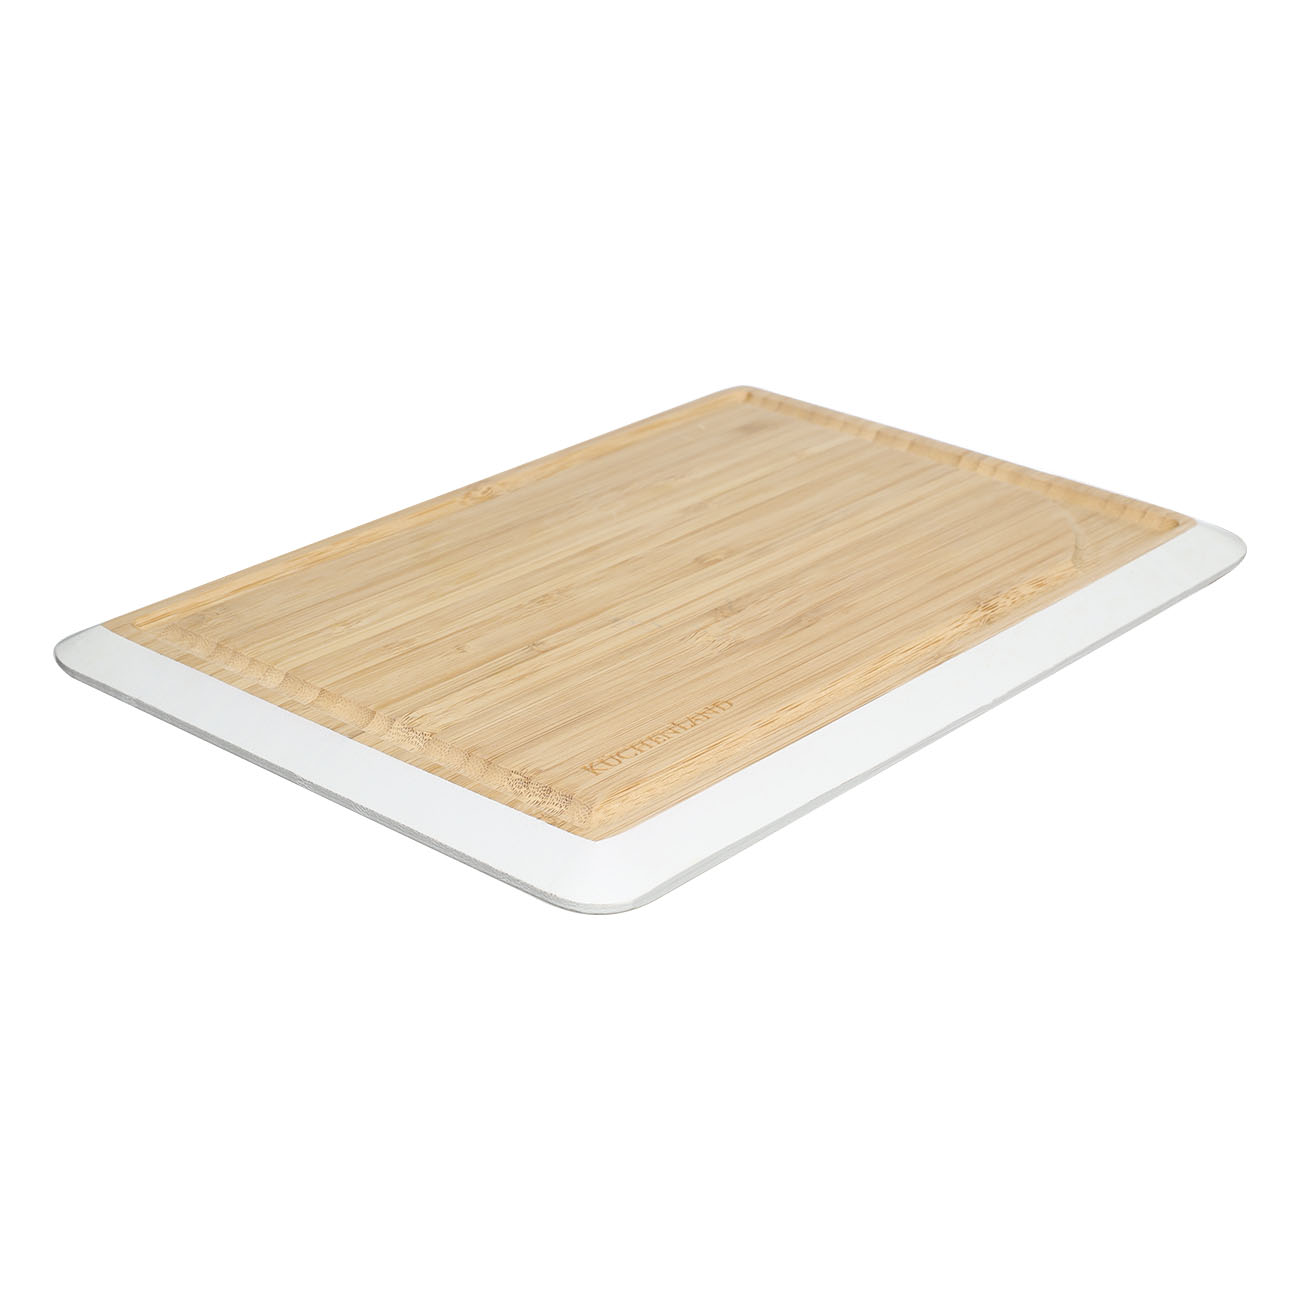 Cutting board, 28x20 cm, bamboo, rectangular, gray edging, Bamboo изображение № 2